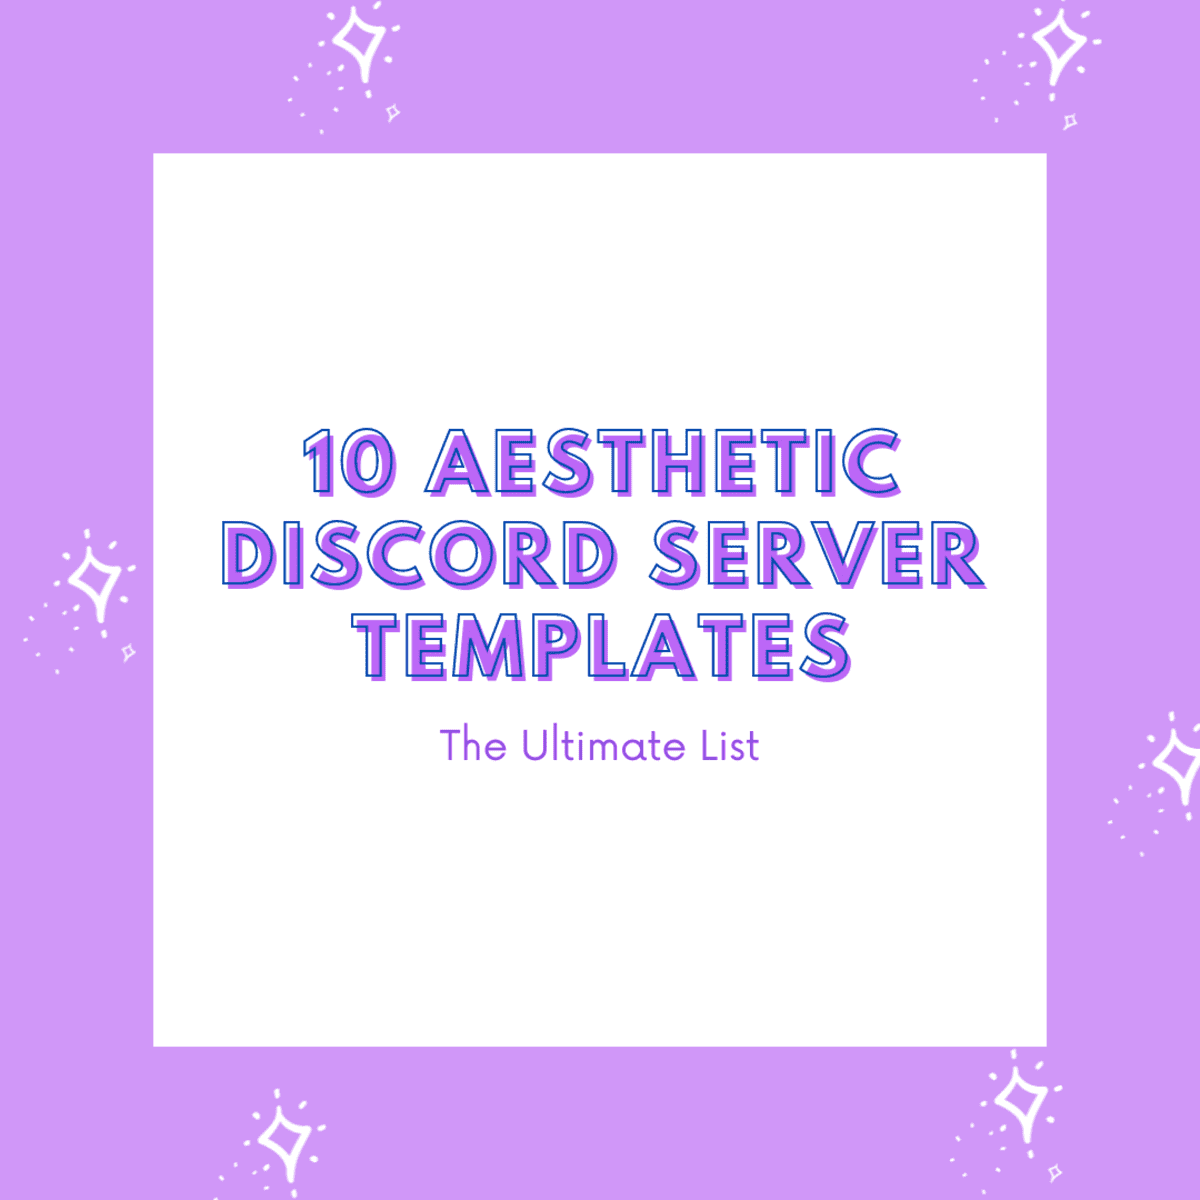 10 Aesthetic Discord Server Templates: The Ultimate List - TurboFuture